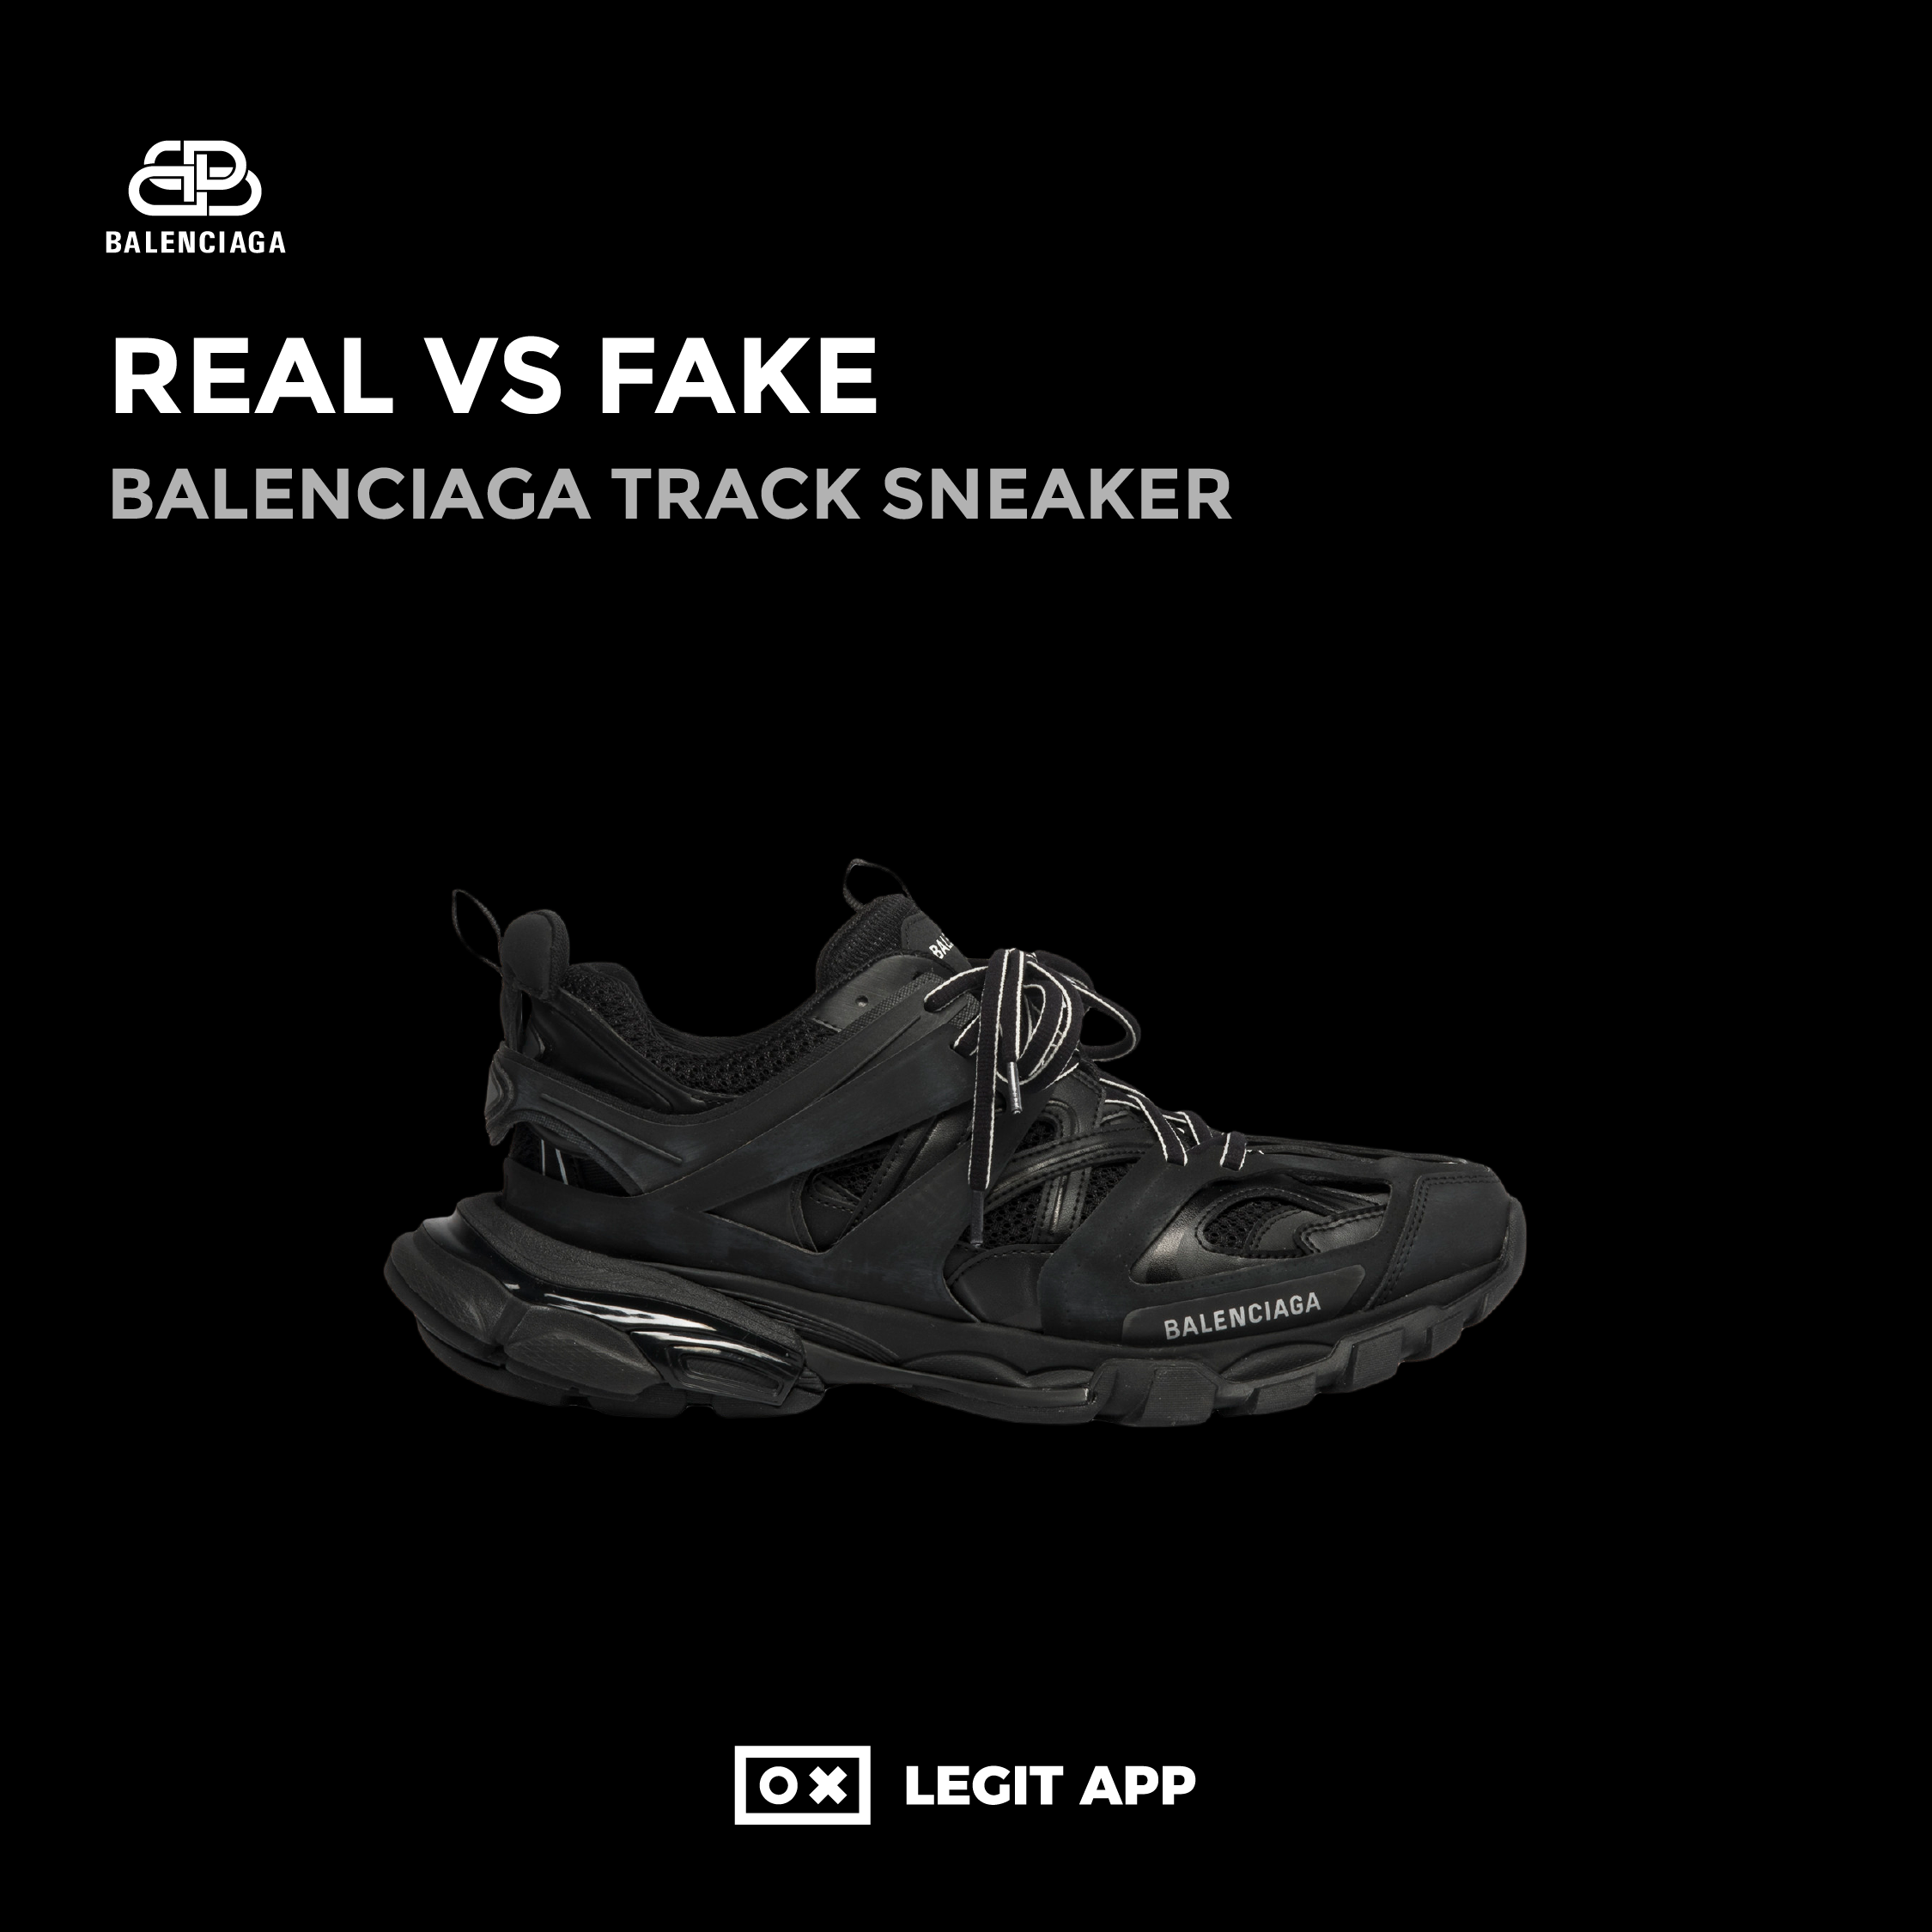 VS REPLICA Balenciaga Track Sneaker LEGIT APP